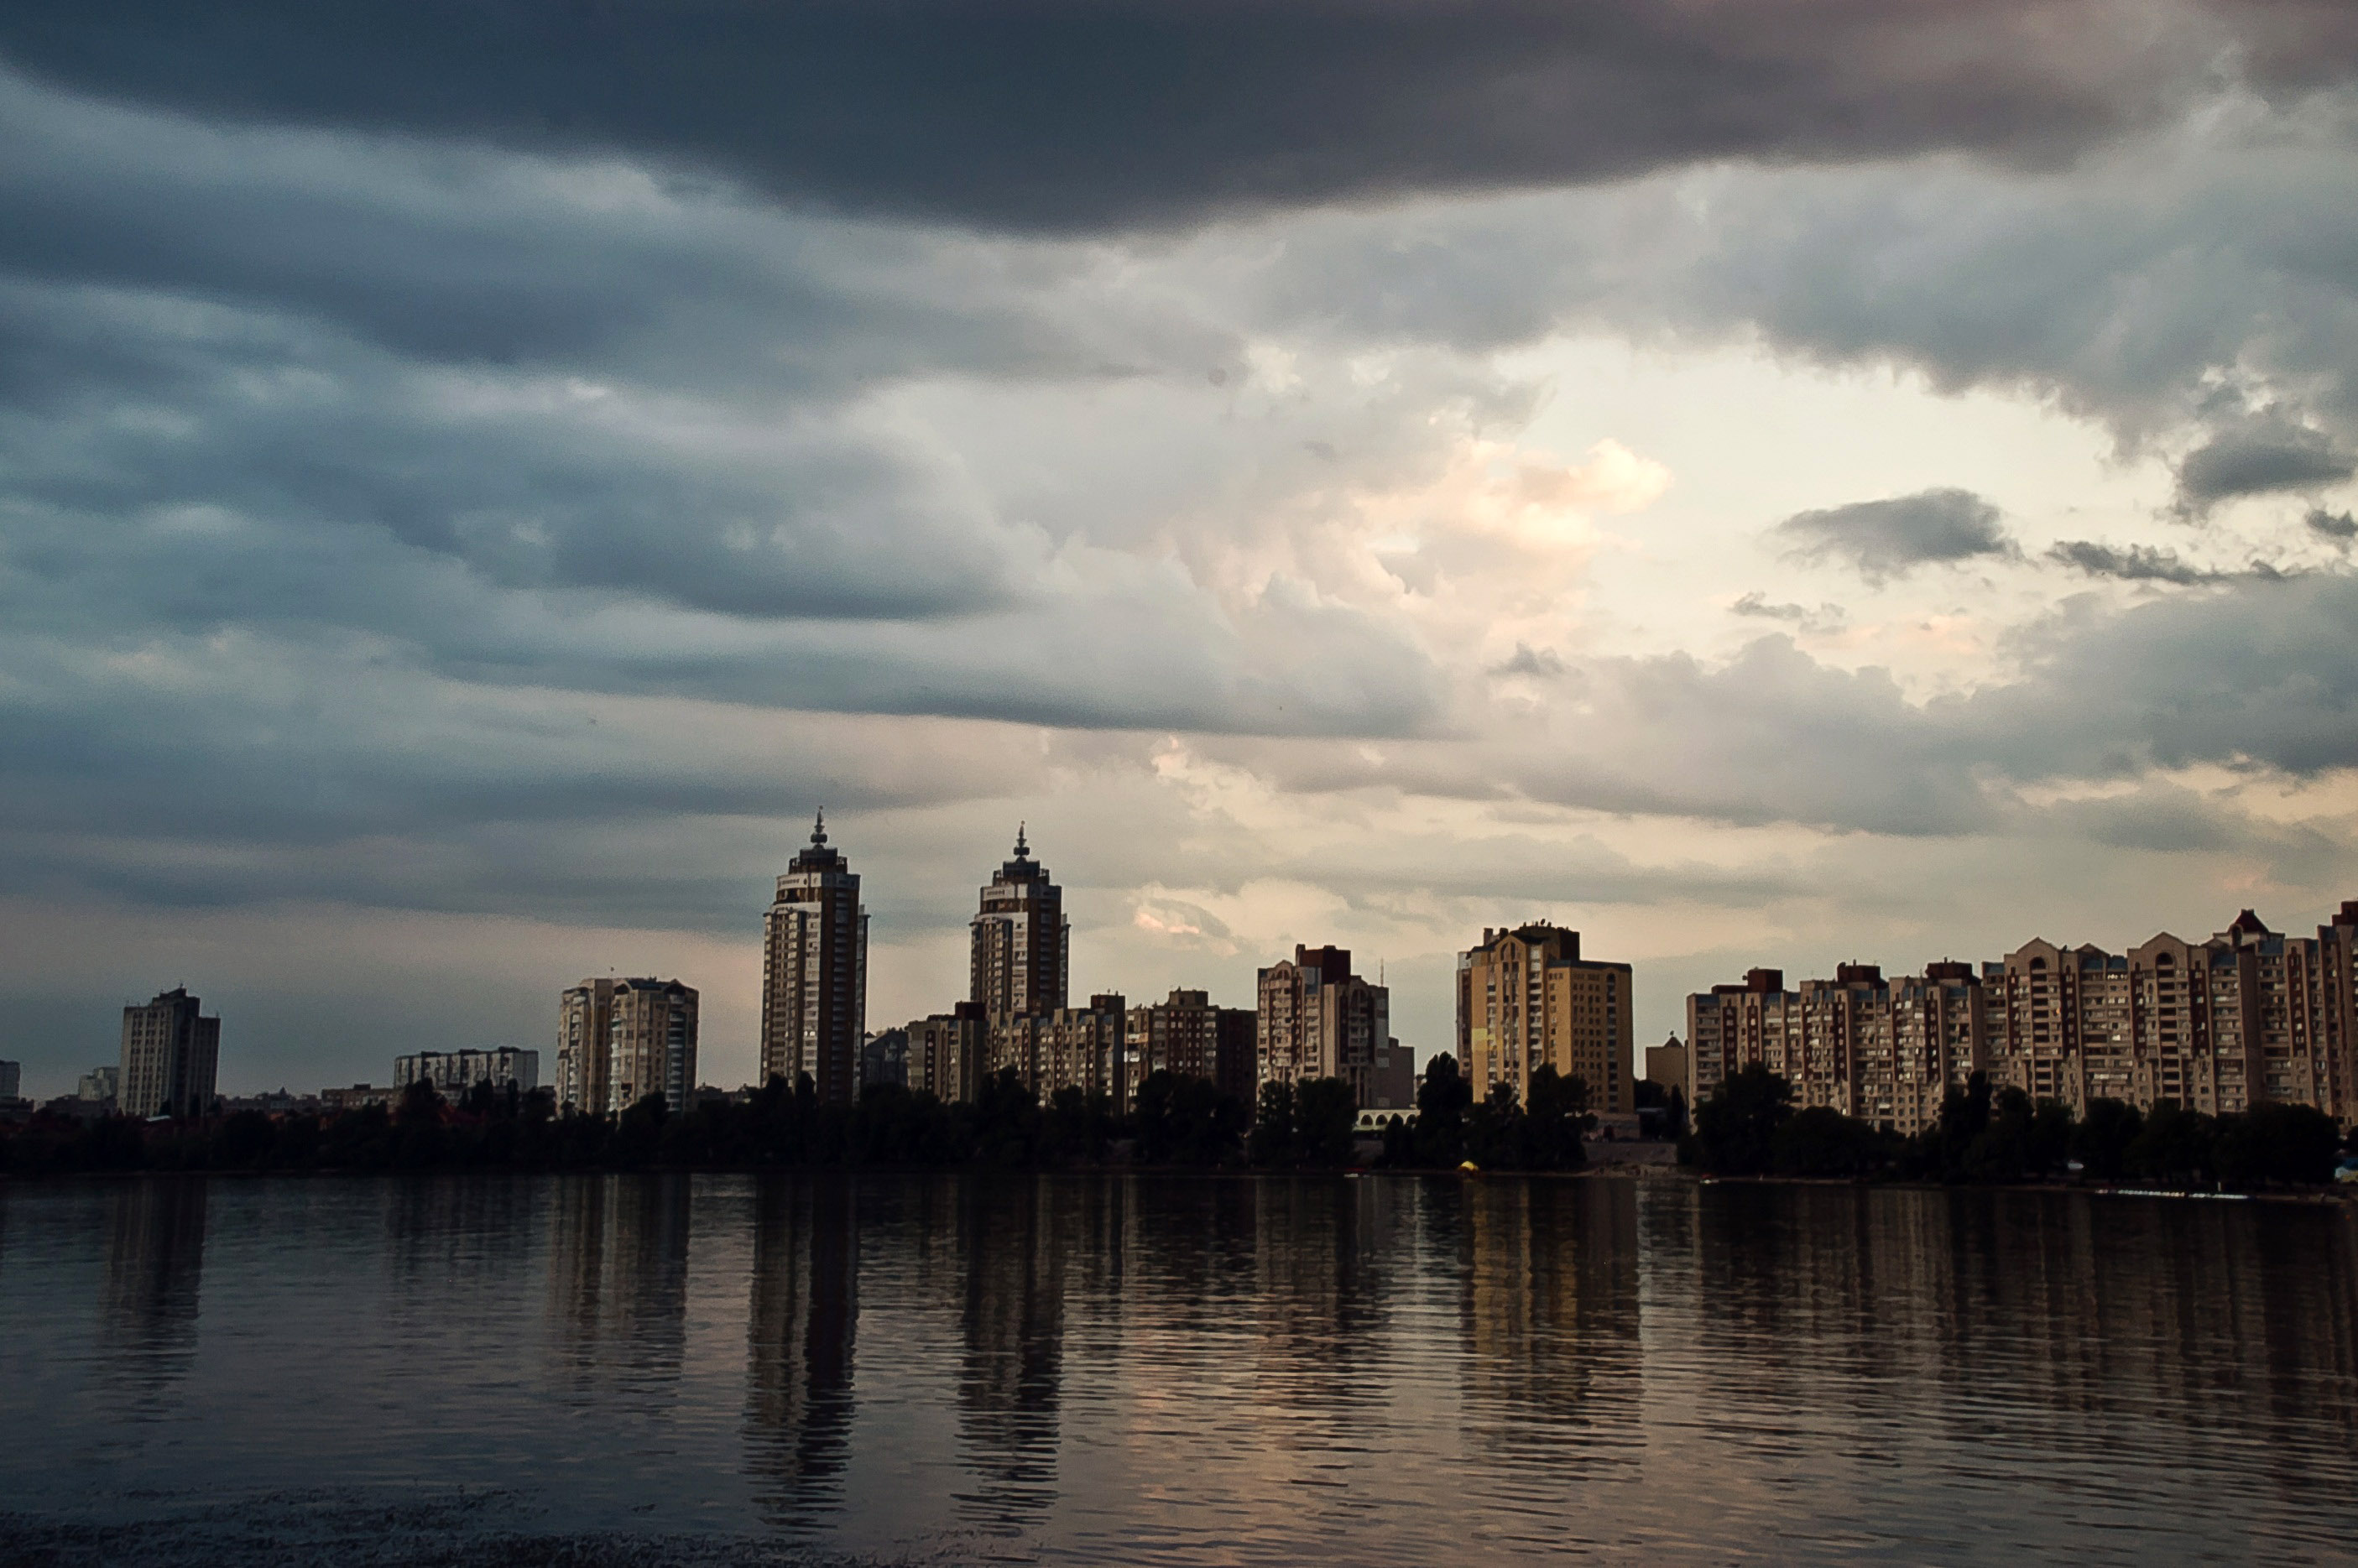 City Skyline in Kiev, Ukraine image - Free stock photo - Public ...